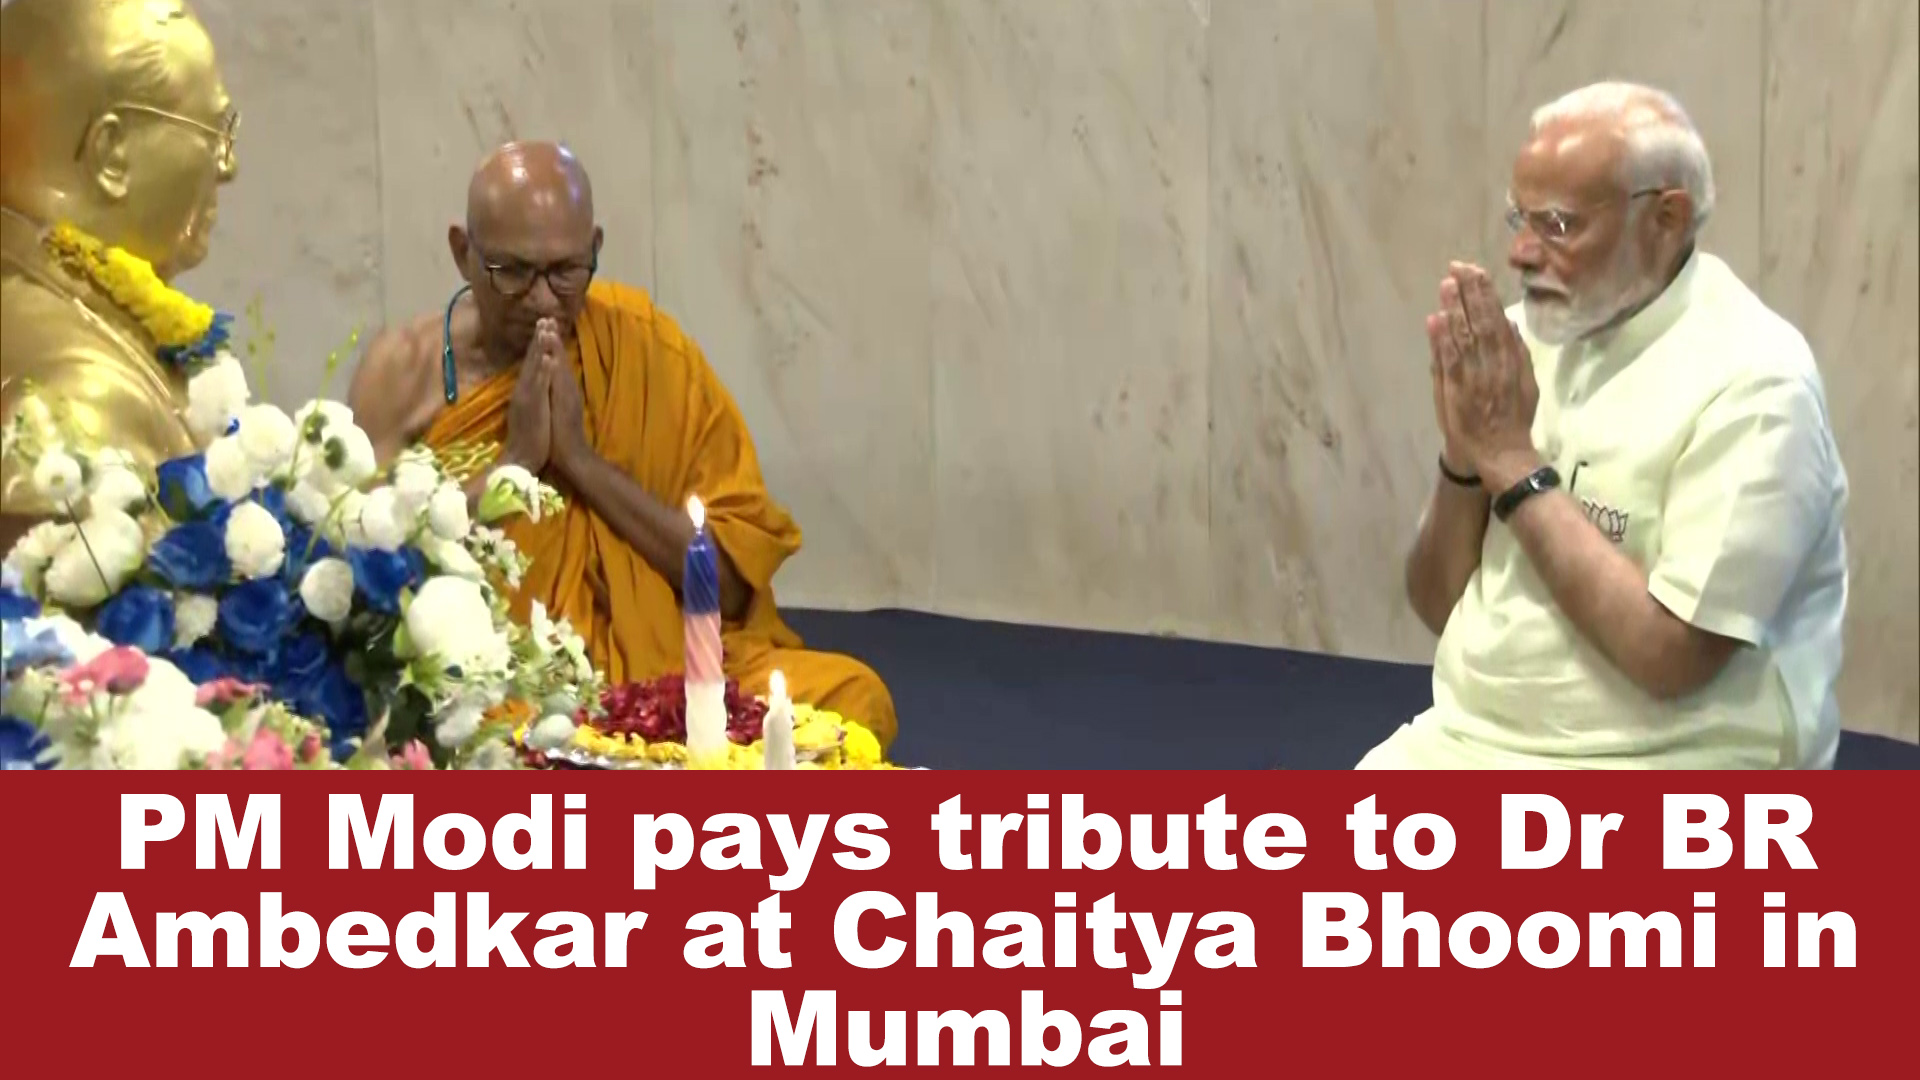 PM Modi pays tribute to Dr BR Ambedkar at Chaitya Bhoomi in Mumbai